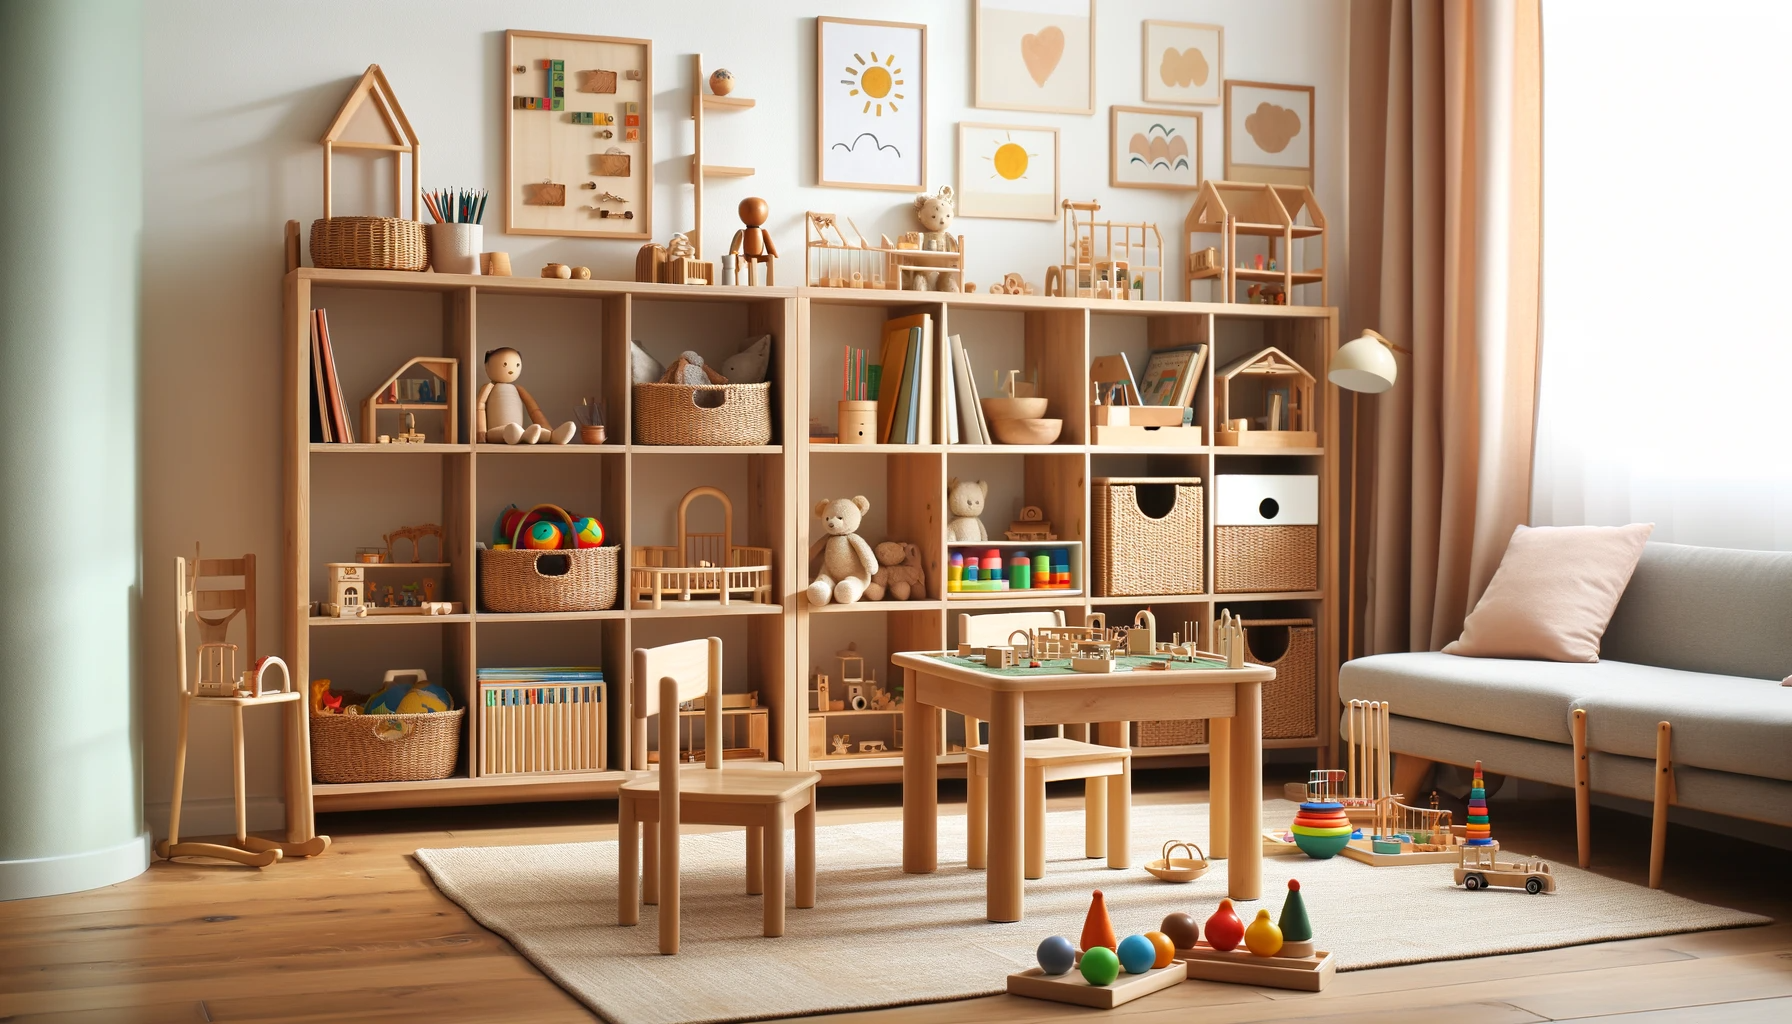 Montessori-inspired child-friendly room